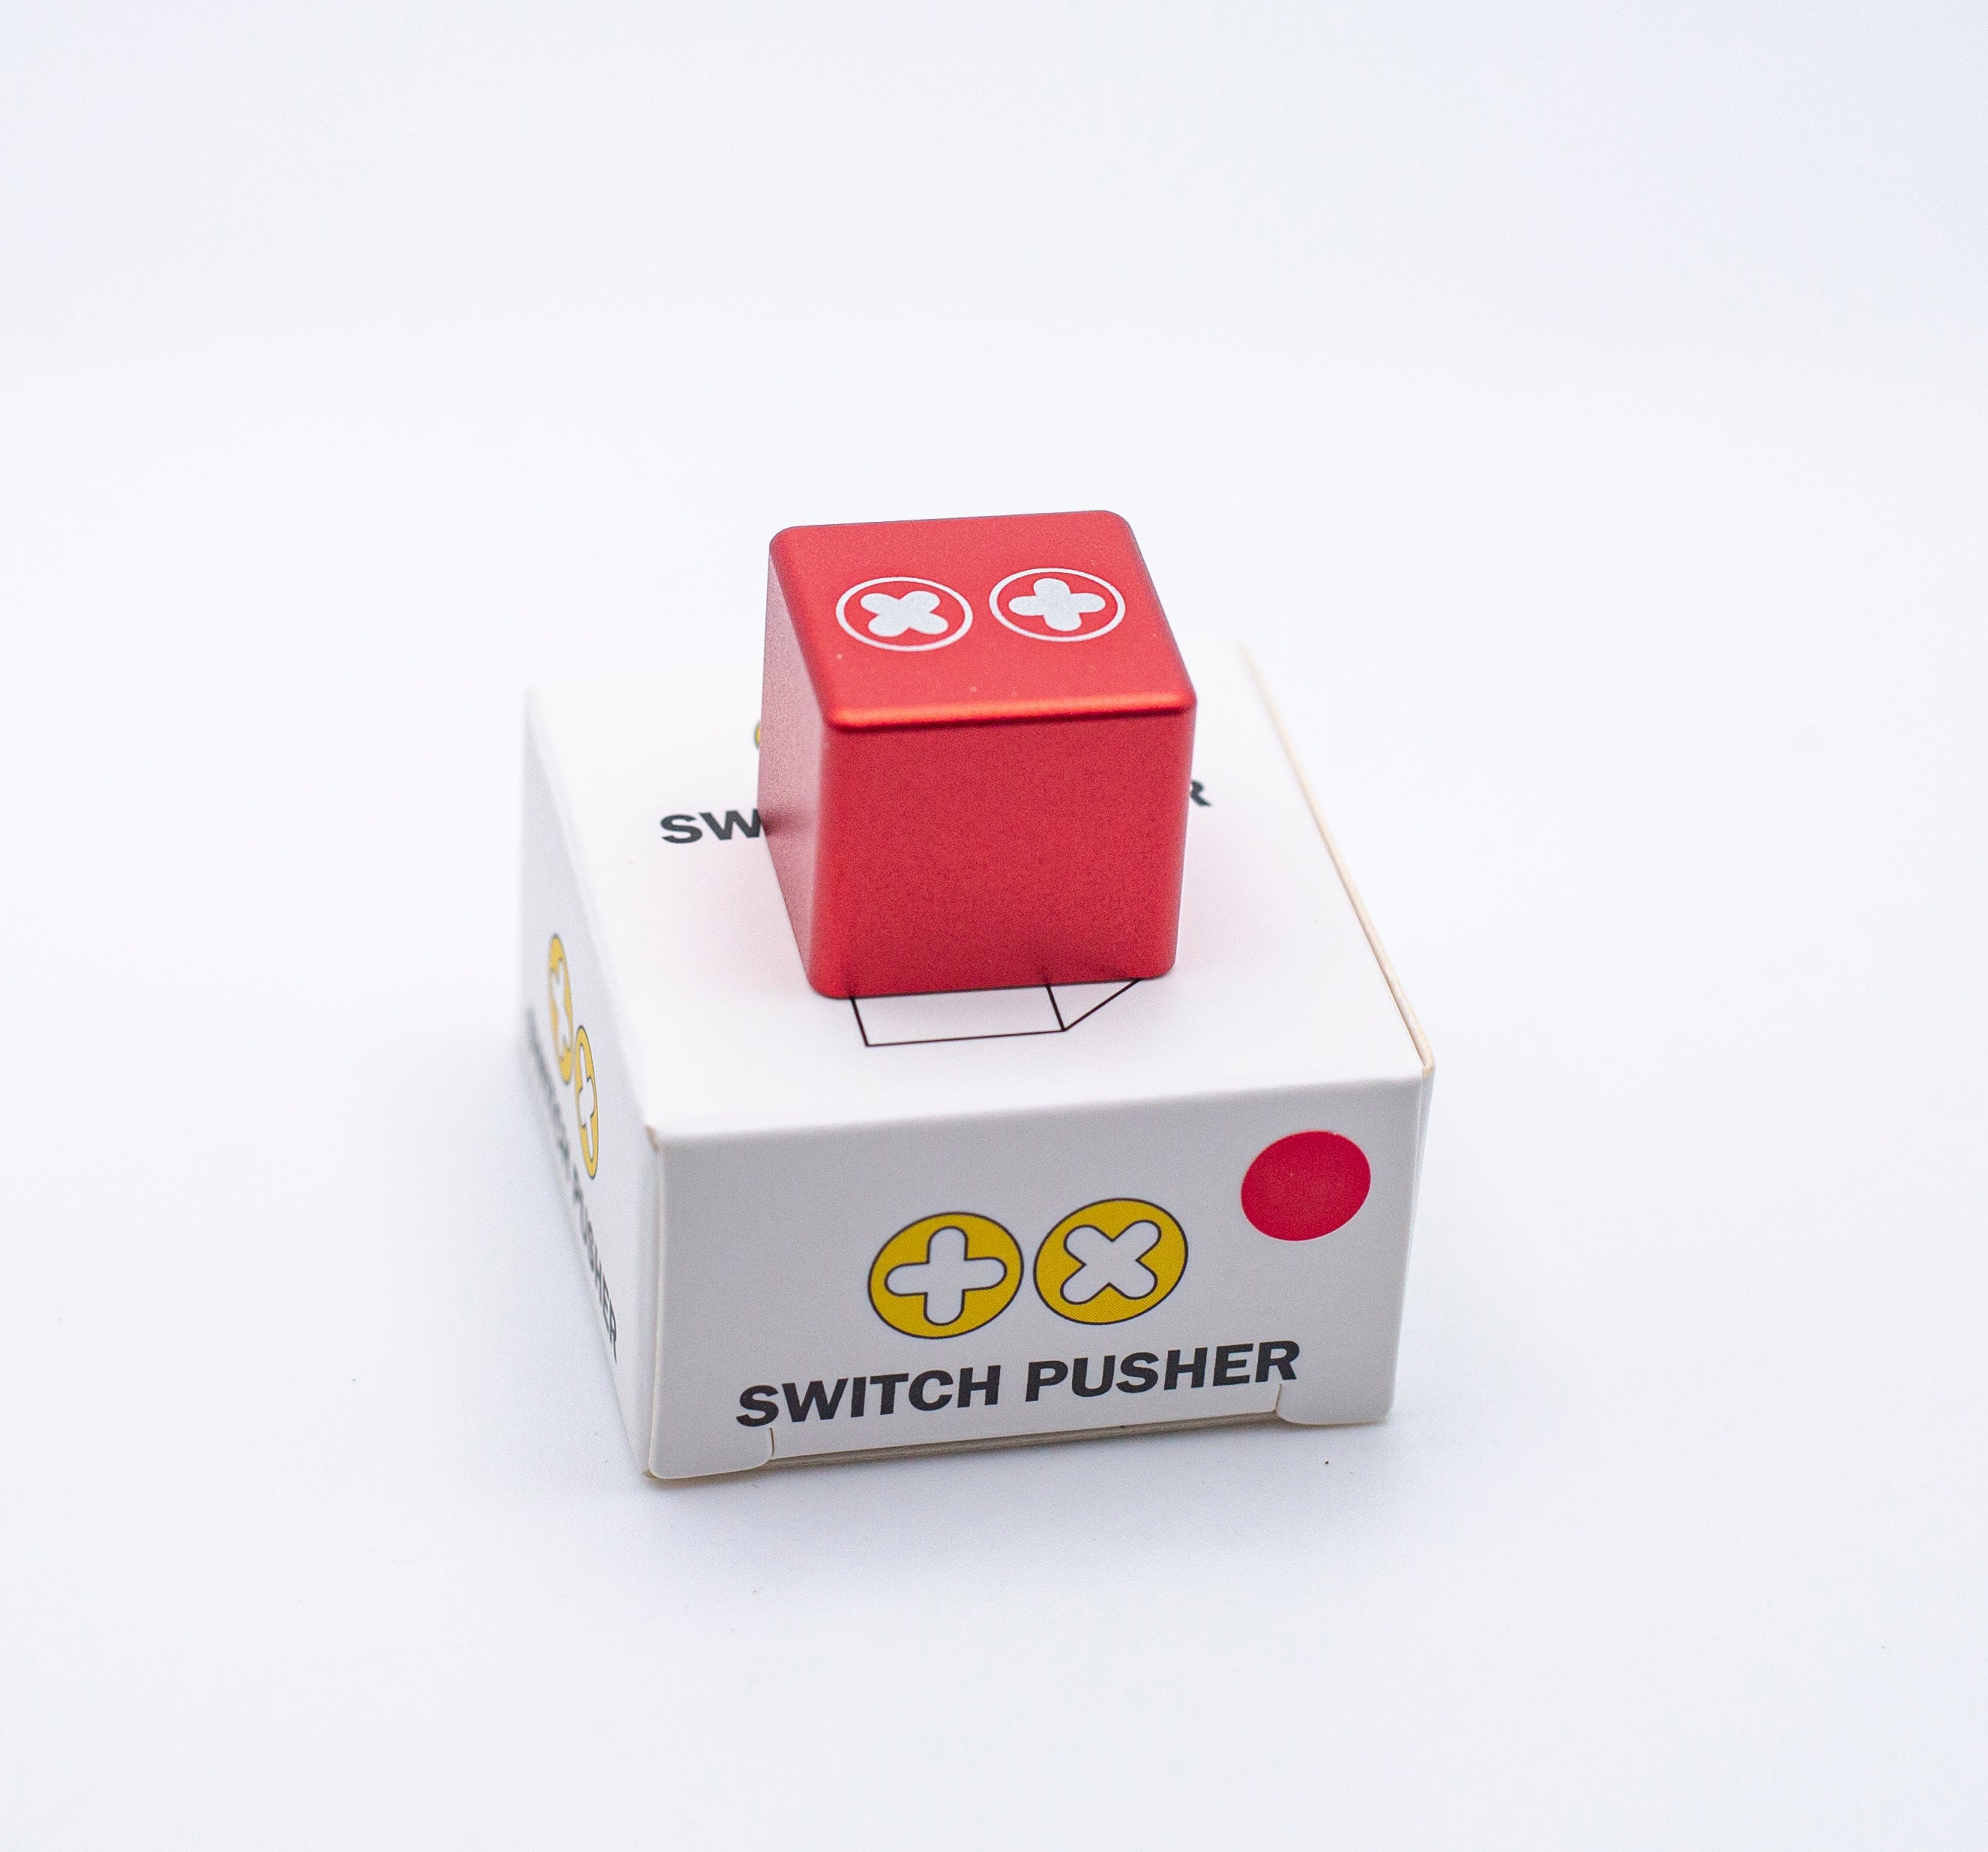 TX Switch Pusher